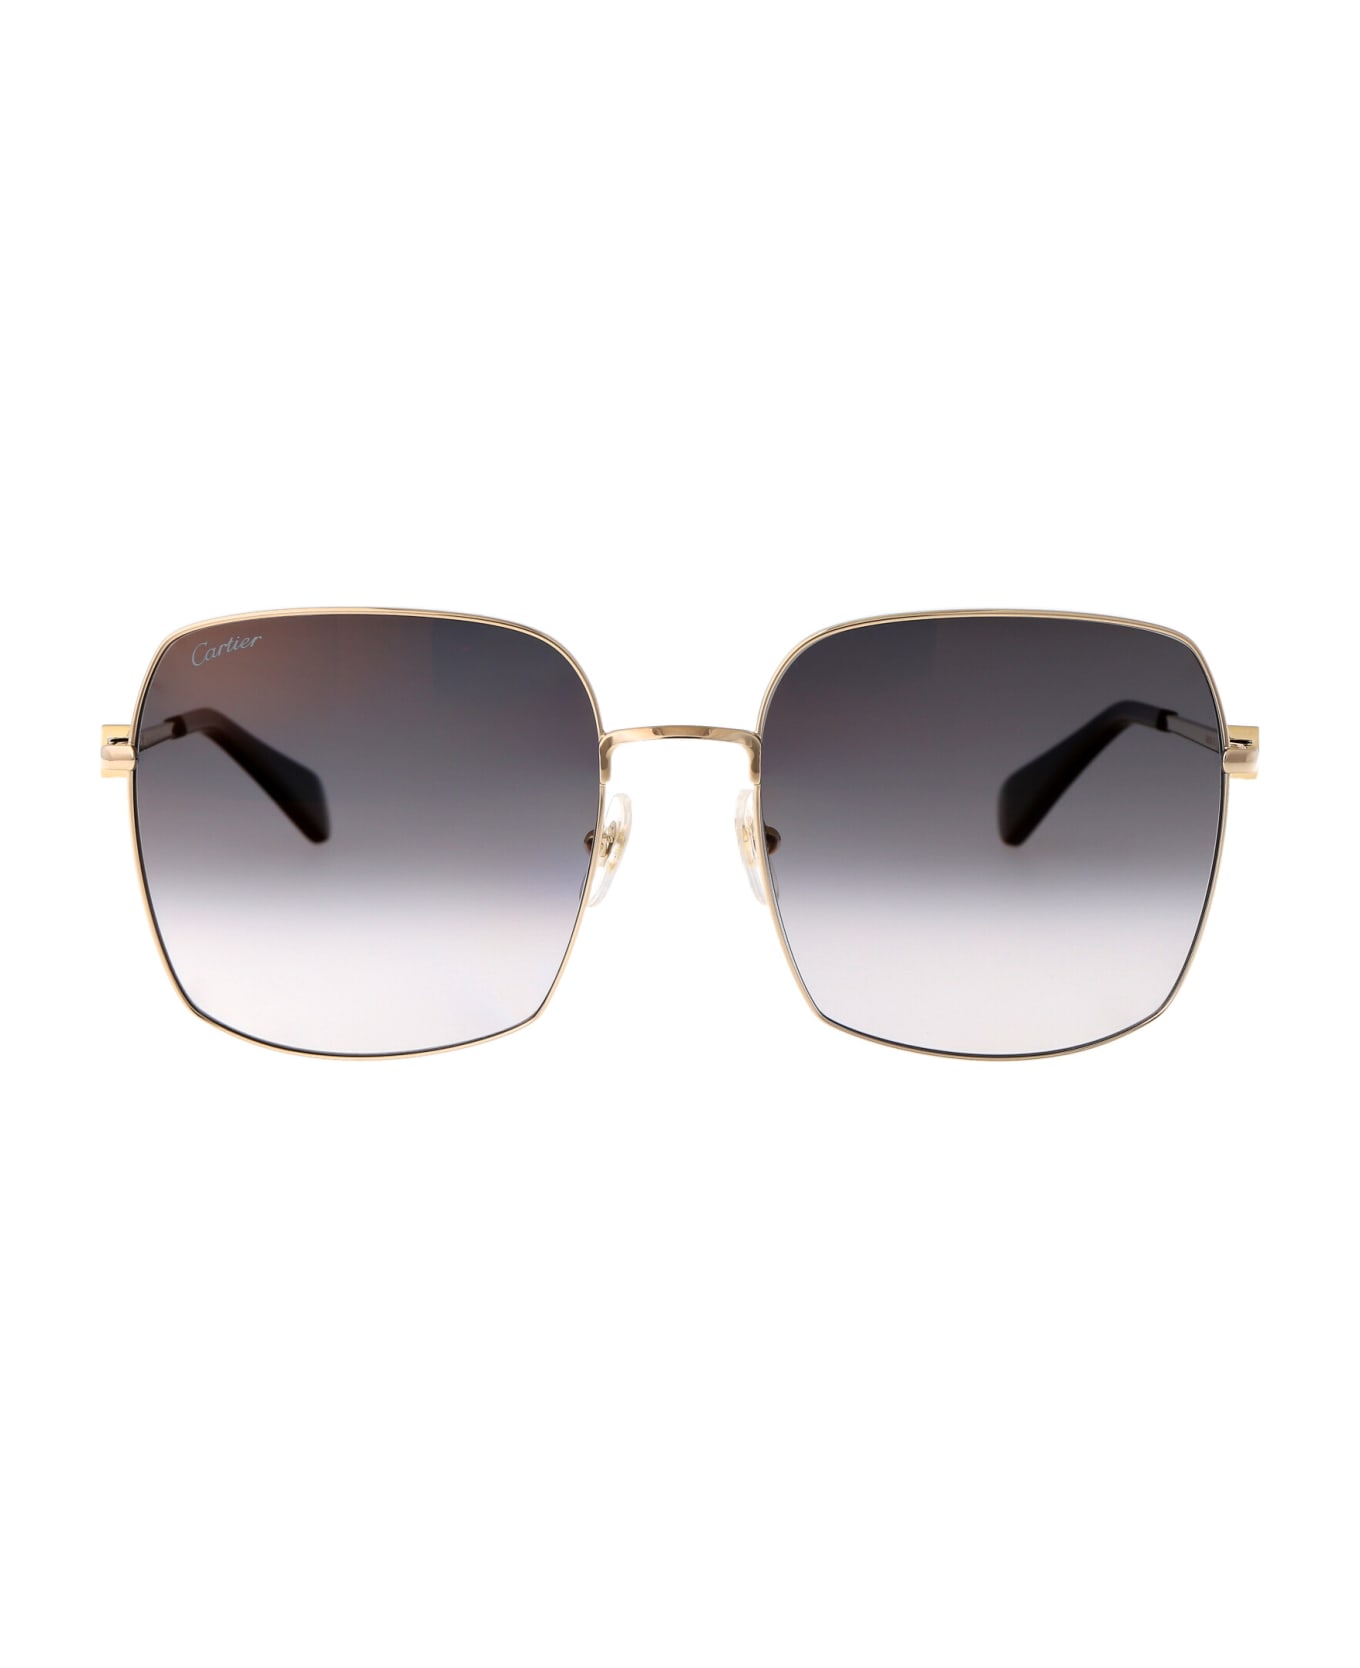 Cartier Eyewear Ct0401s Sunglasses - 001 GOLD GOLD GREY